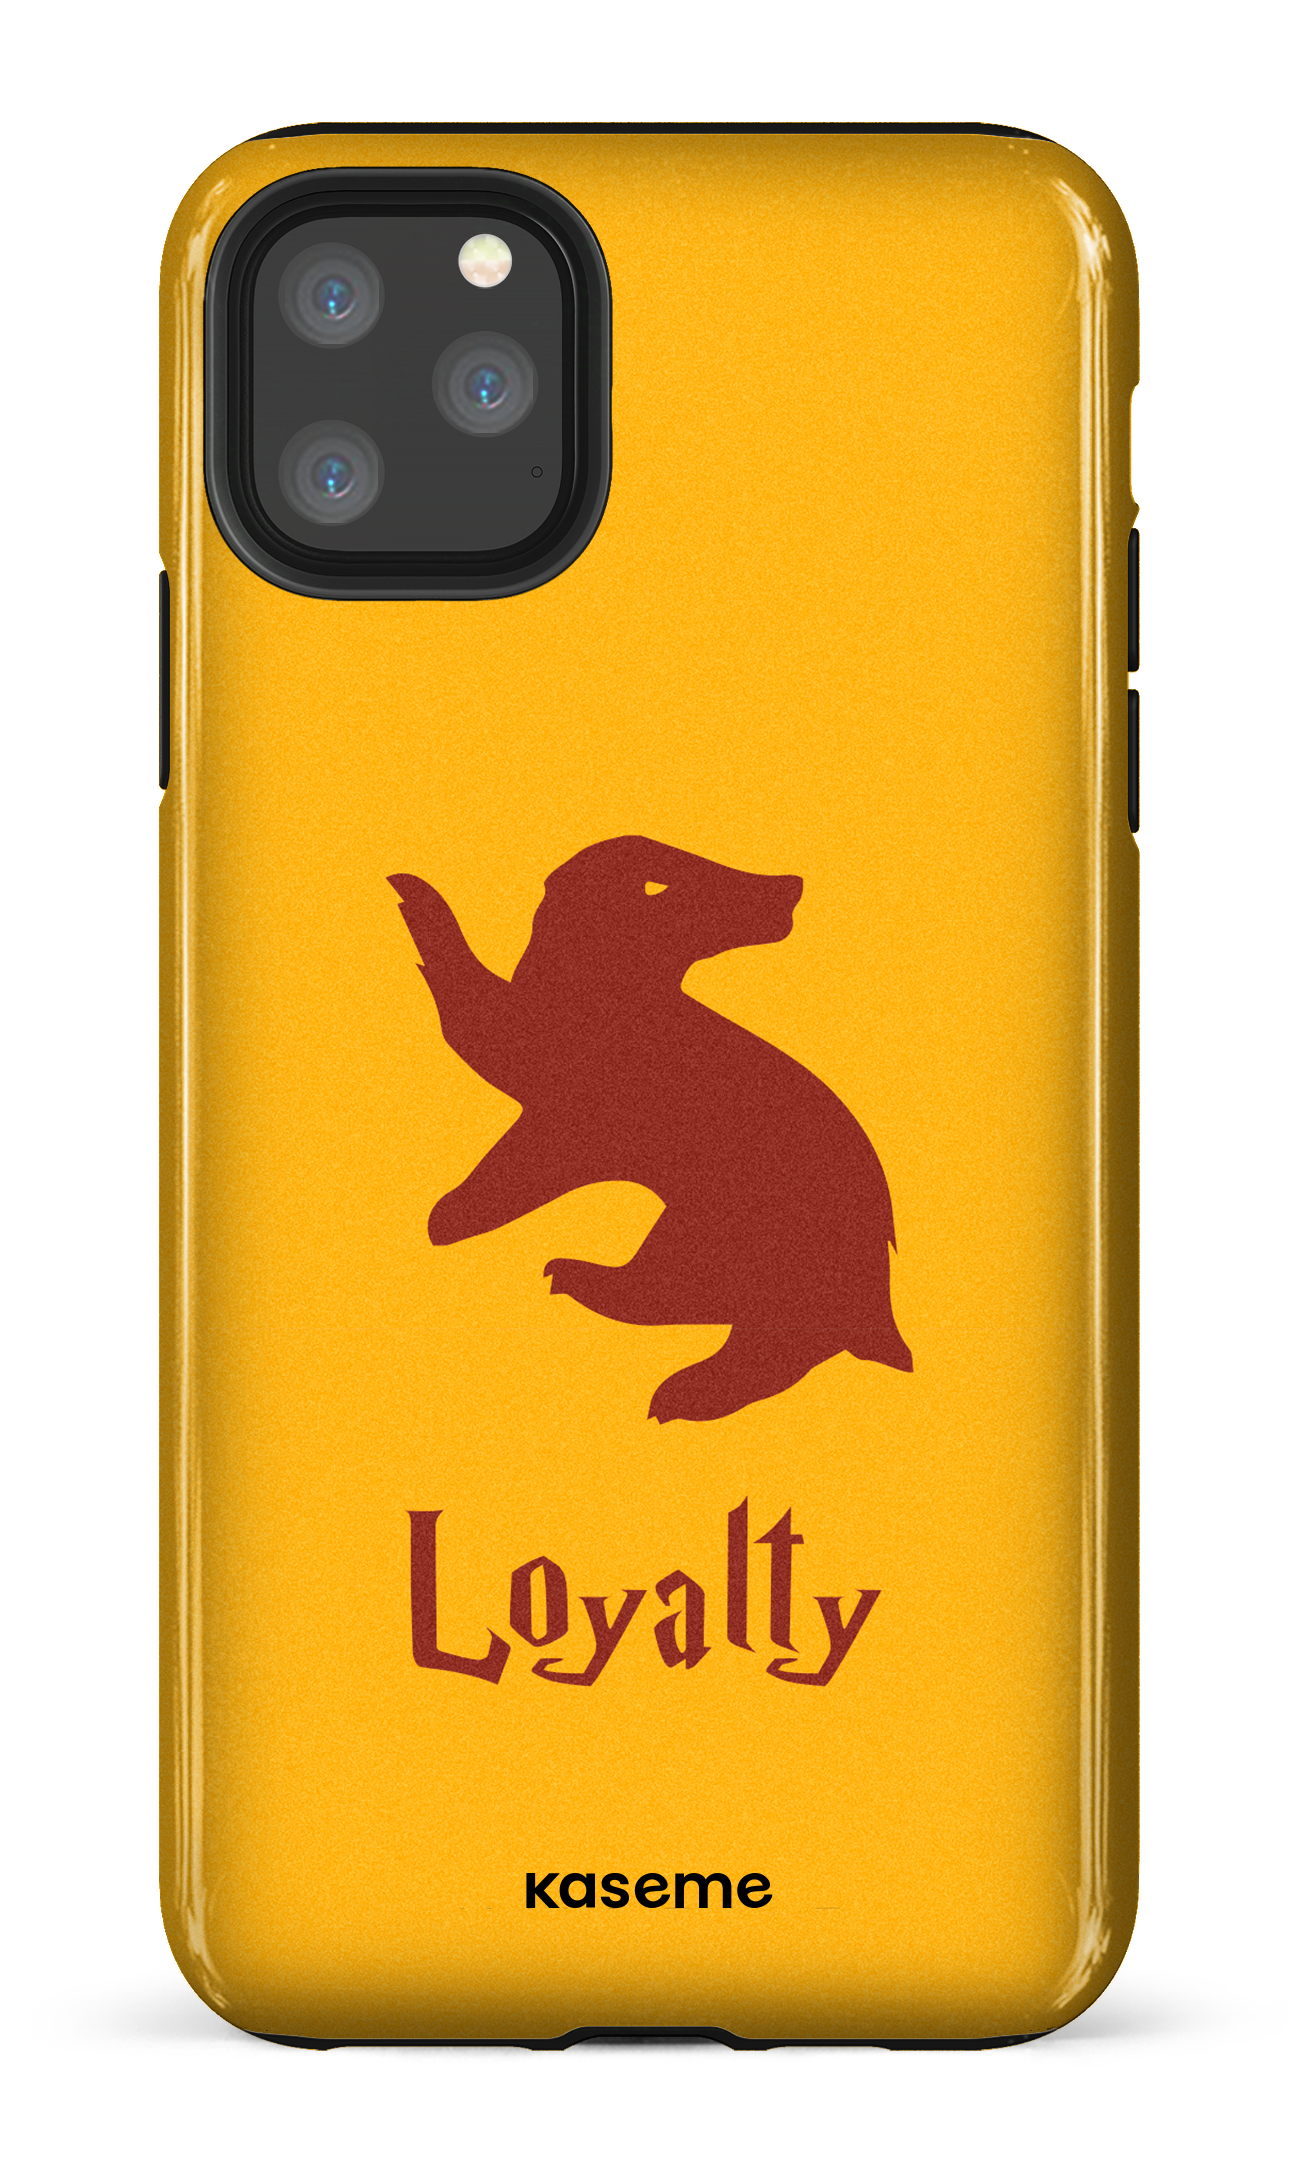 Loyalty - iPhone 11 Pro Max